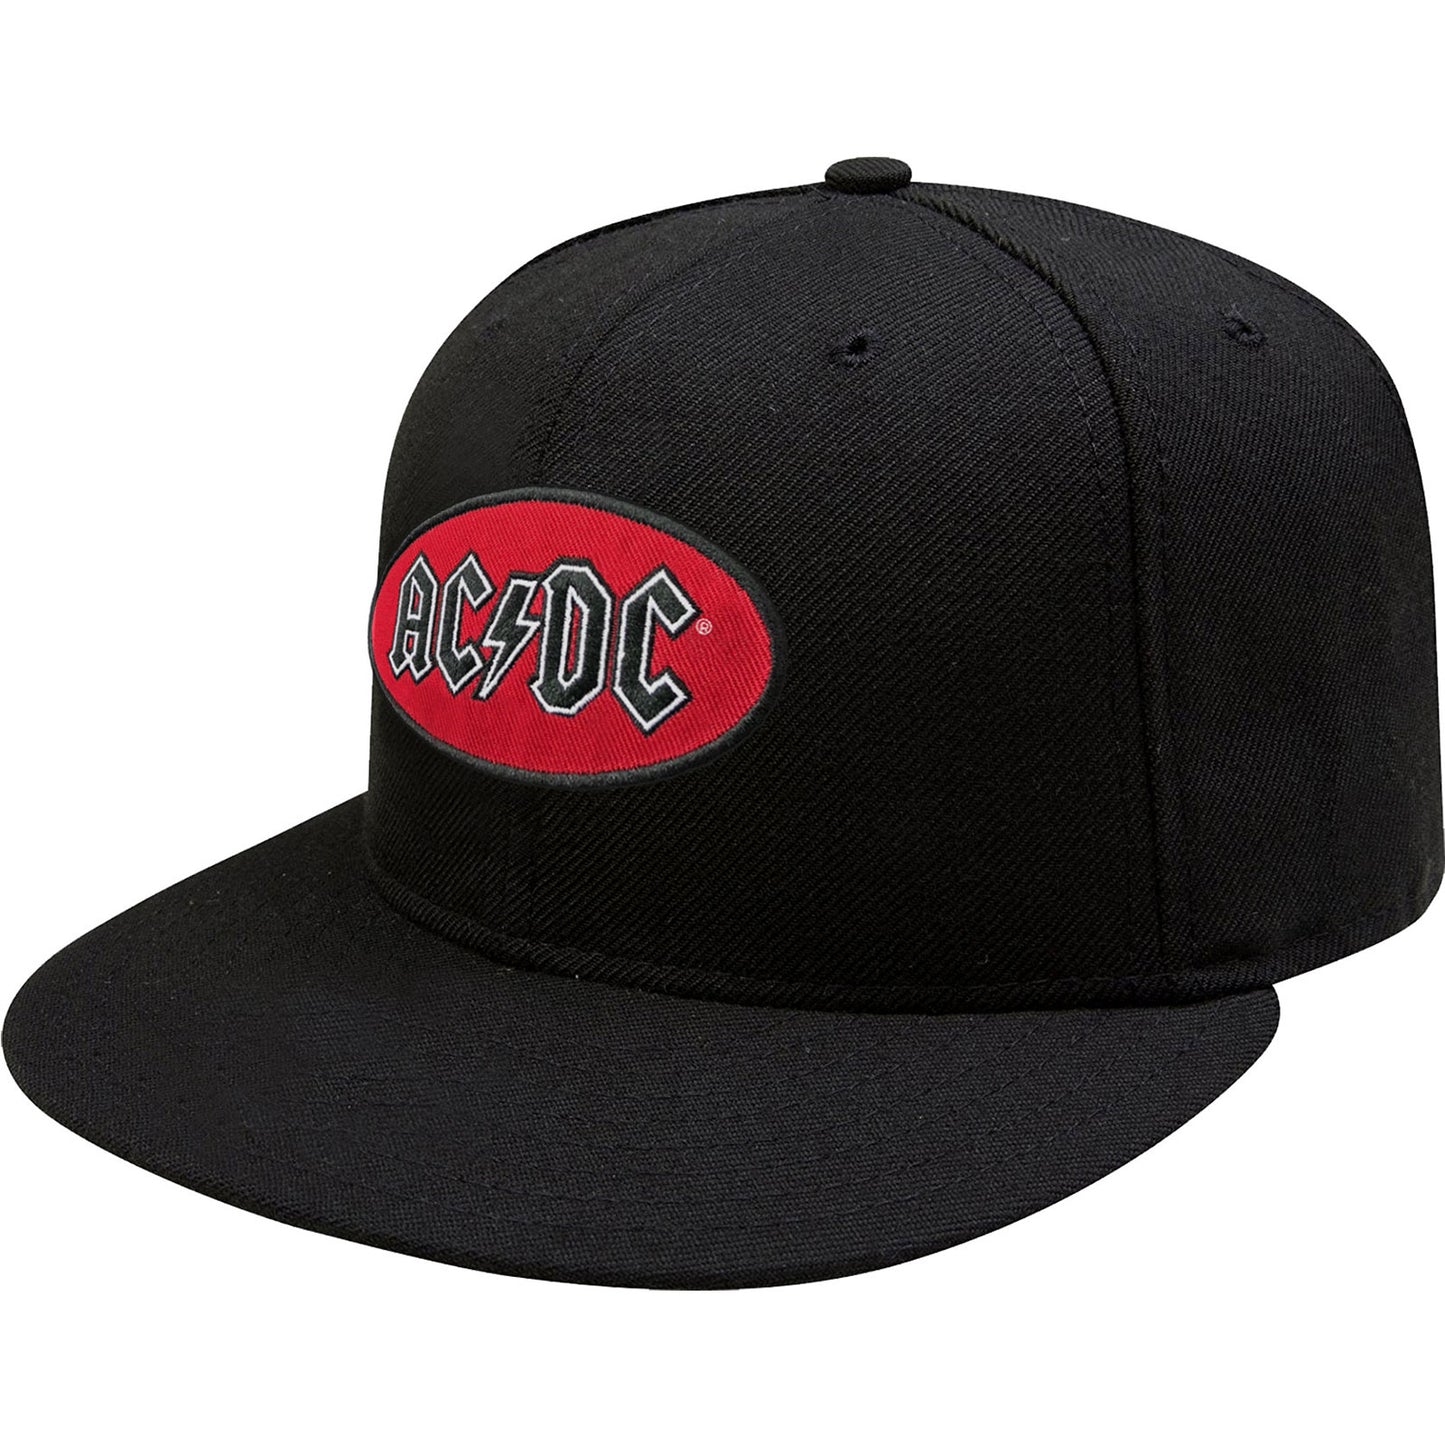 AC/DC UNISEX SNAPBACK CAP: OVAL LOGO